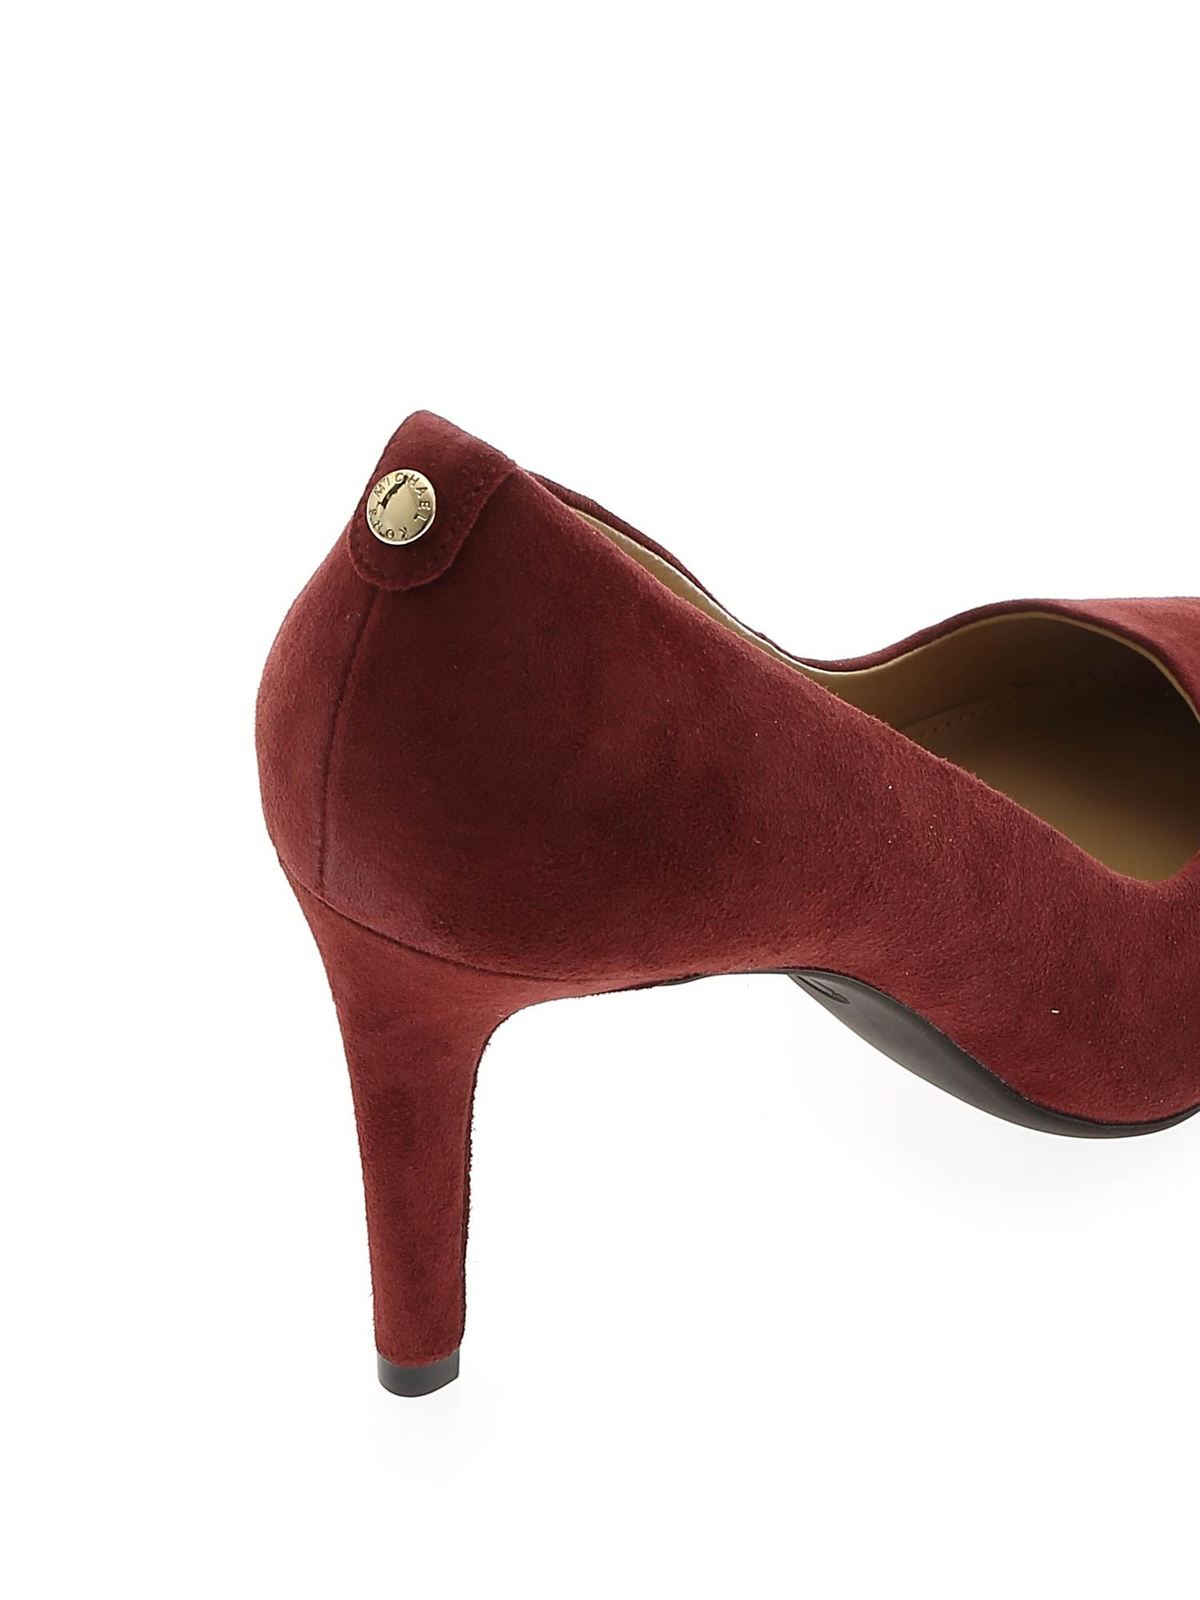 Court shoes Michael Kors - Doroty pumps in burgundy - 4OF6DOMP1SBRANDY